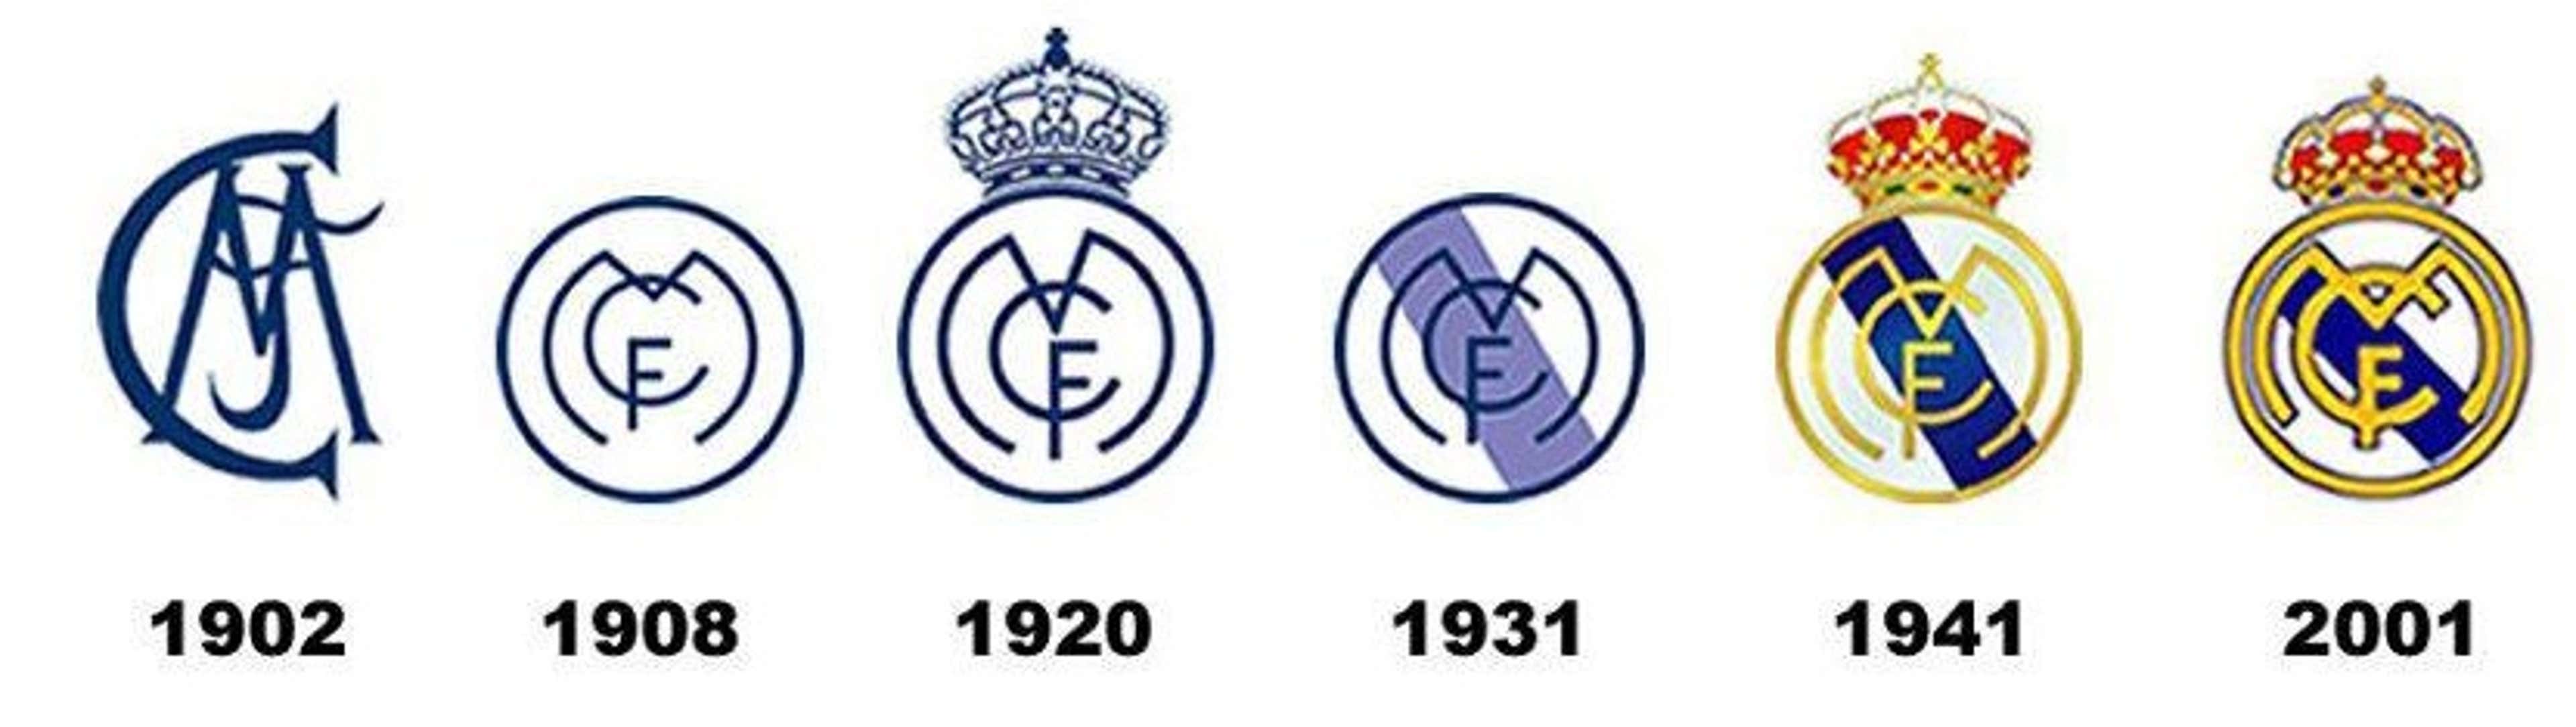 Real Madrid logos crests